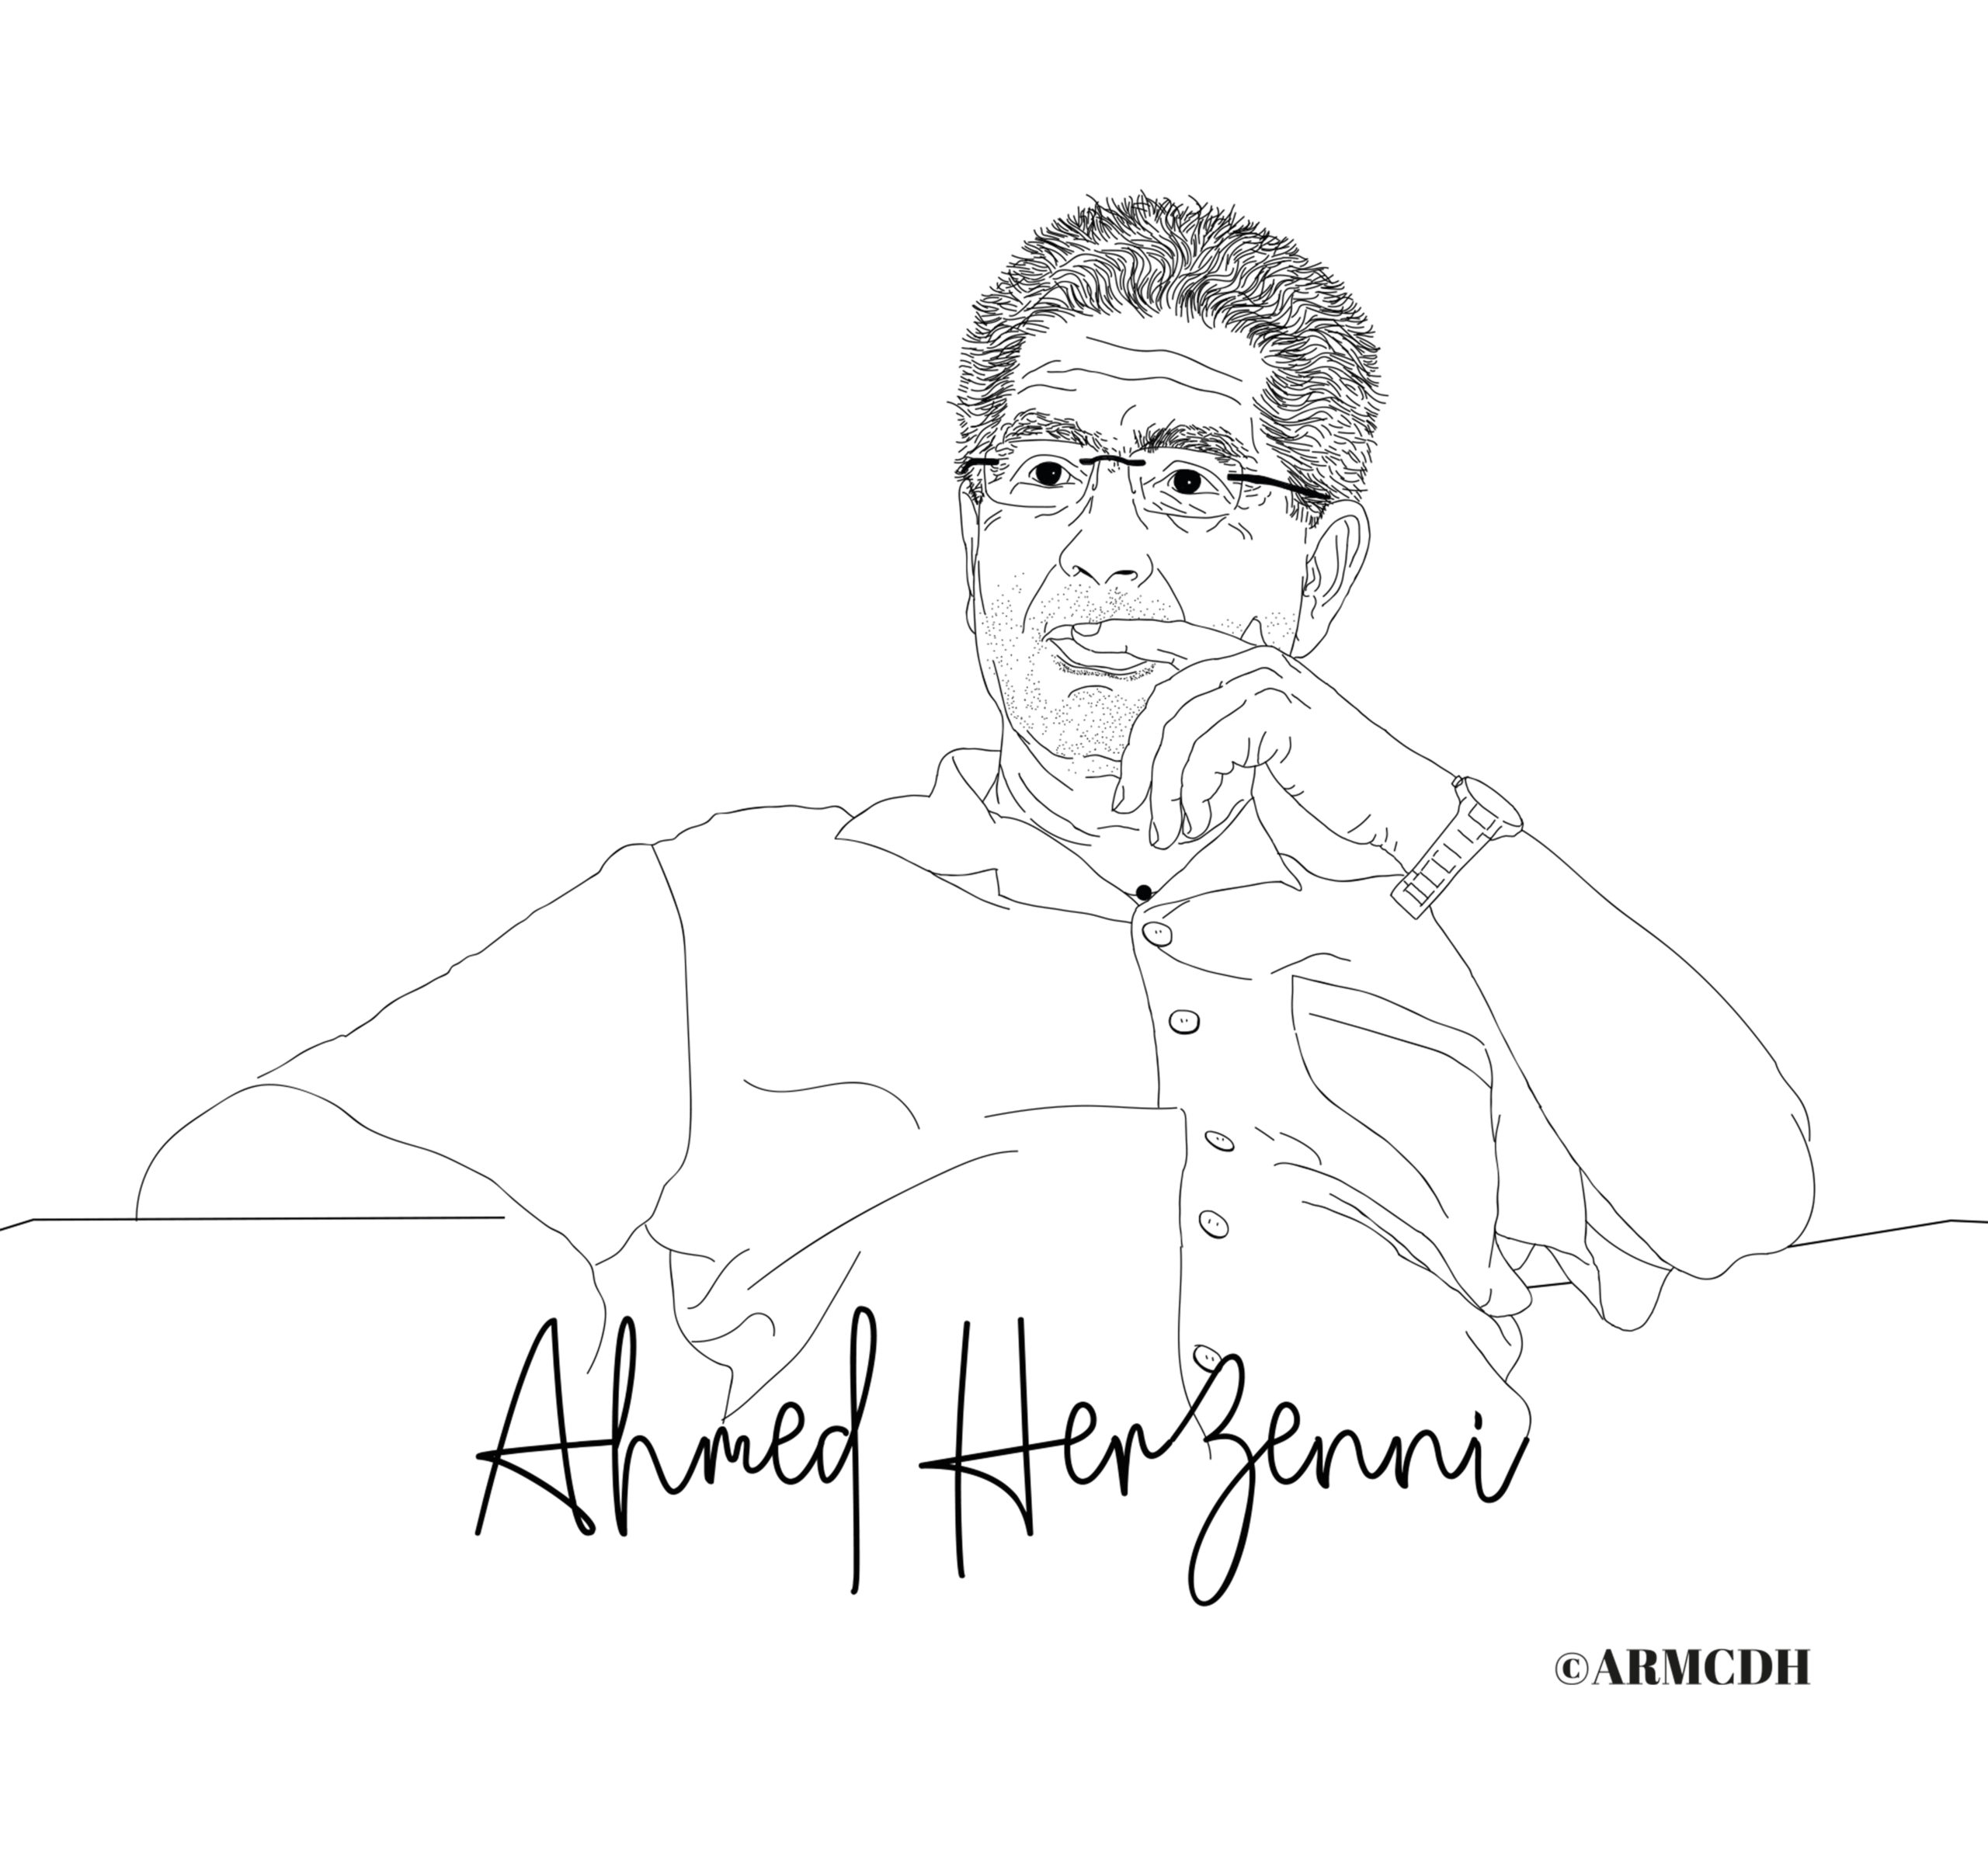 Hommage à Feu Ahmed Herzenni